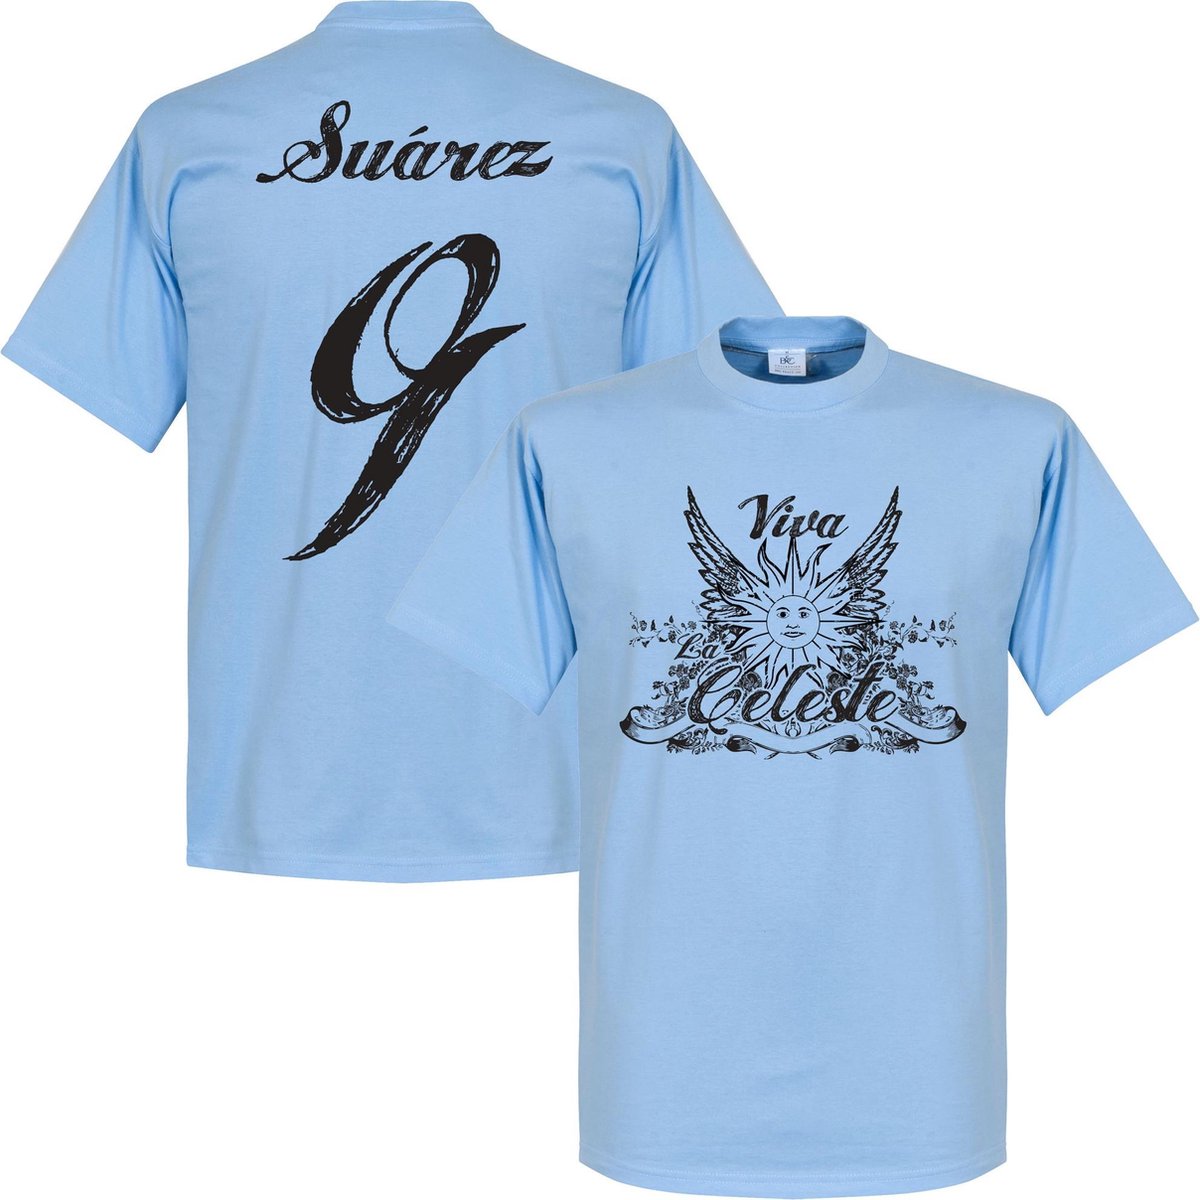 Luis Suarez Uruguay T-Shirt - XS